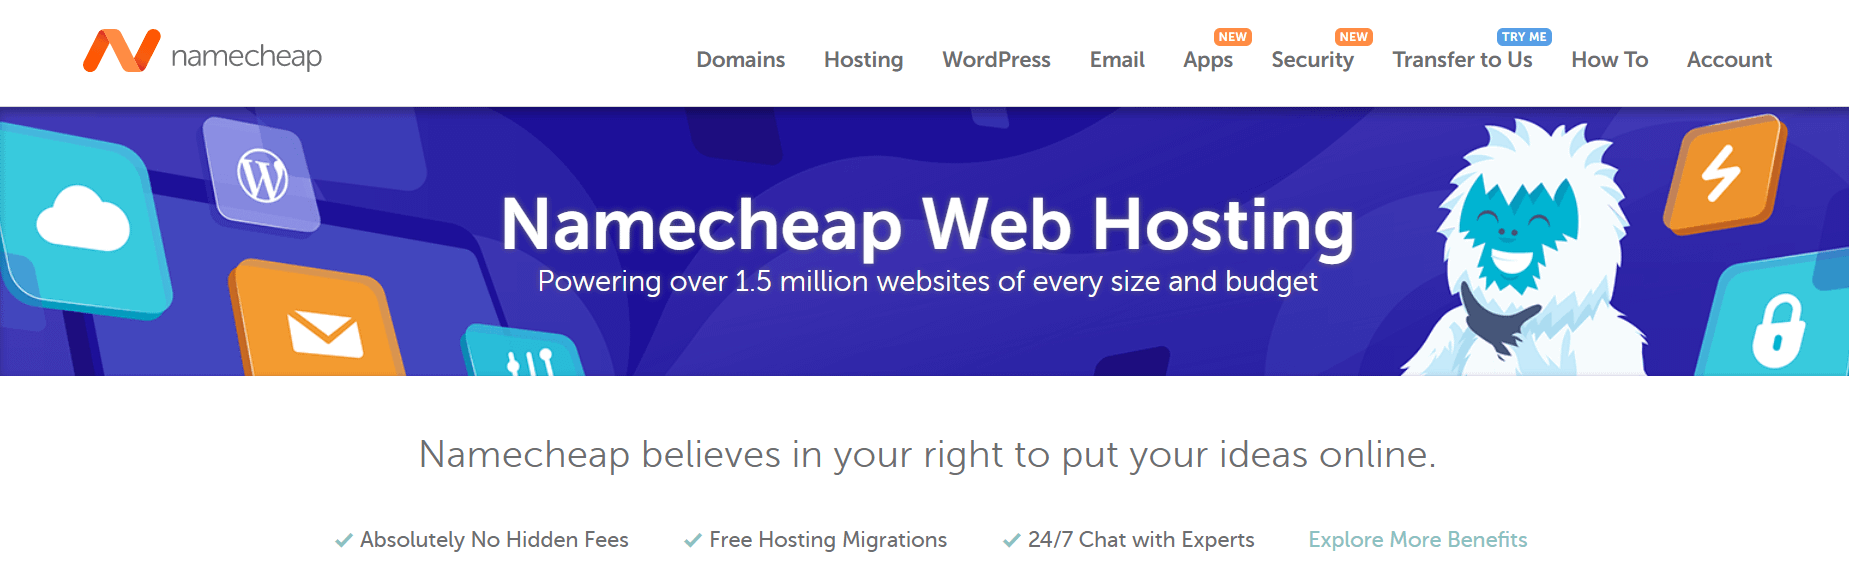 Domain name vs web hosting: Namecheap provides both